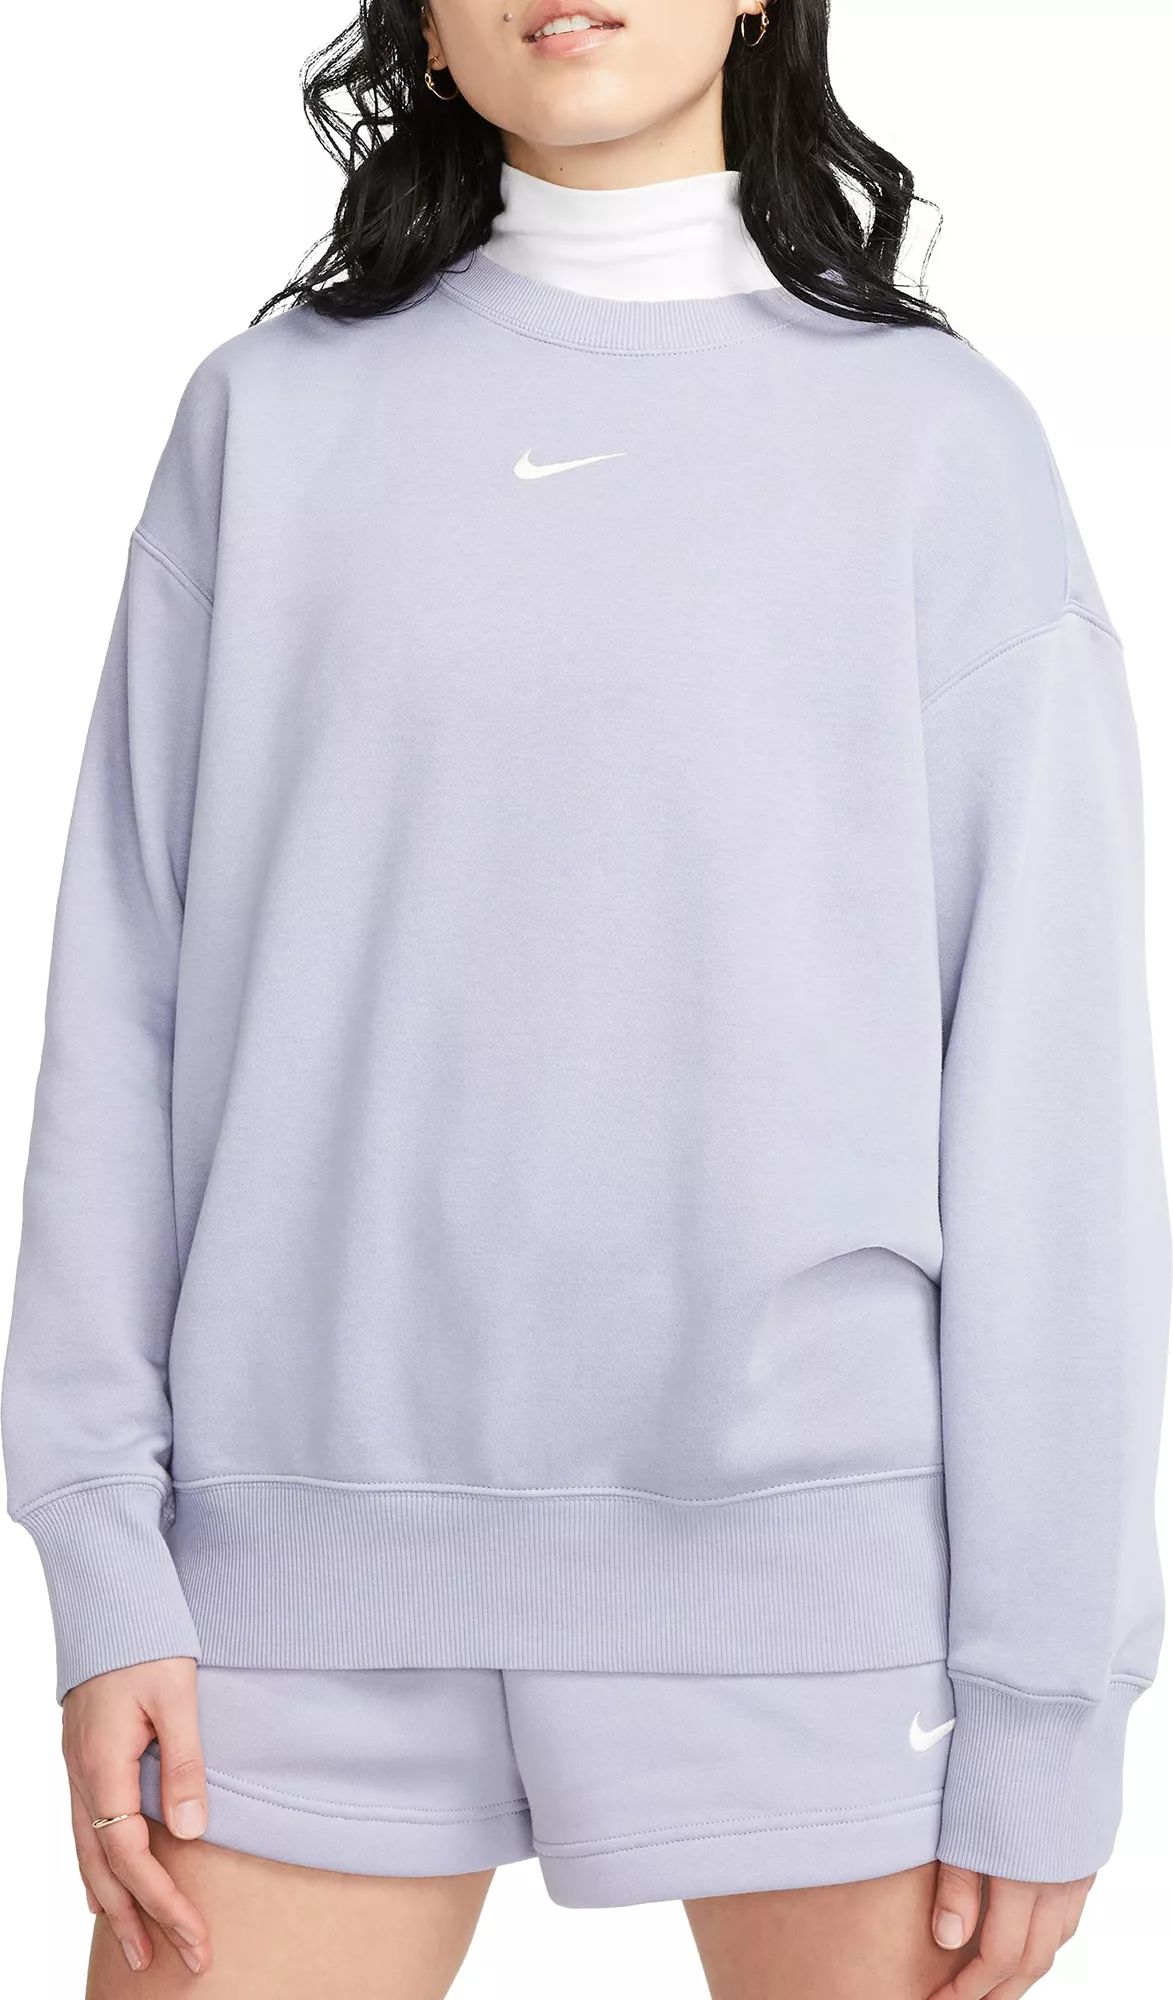 Nike Women's Sportswear Phoenix Fleece Sweatshirt, Small, Indigo Haze | Dick's Sporting Goods